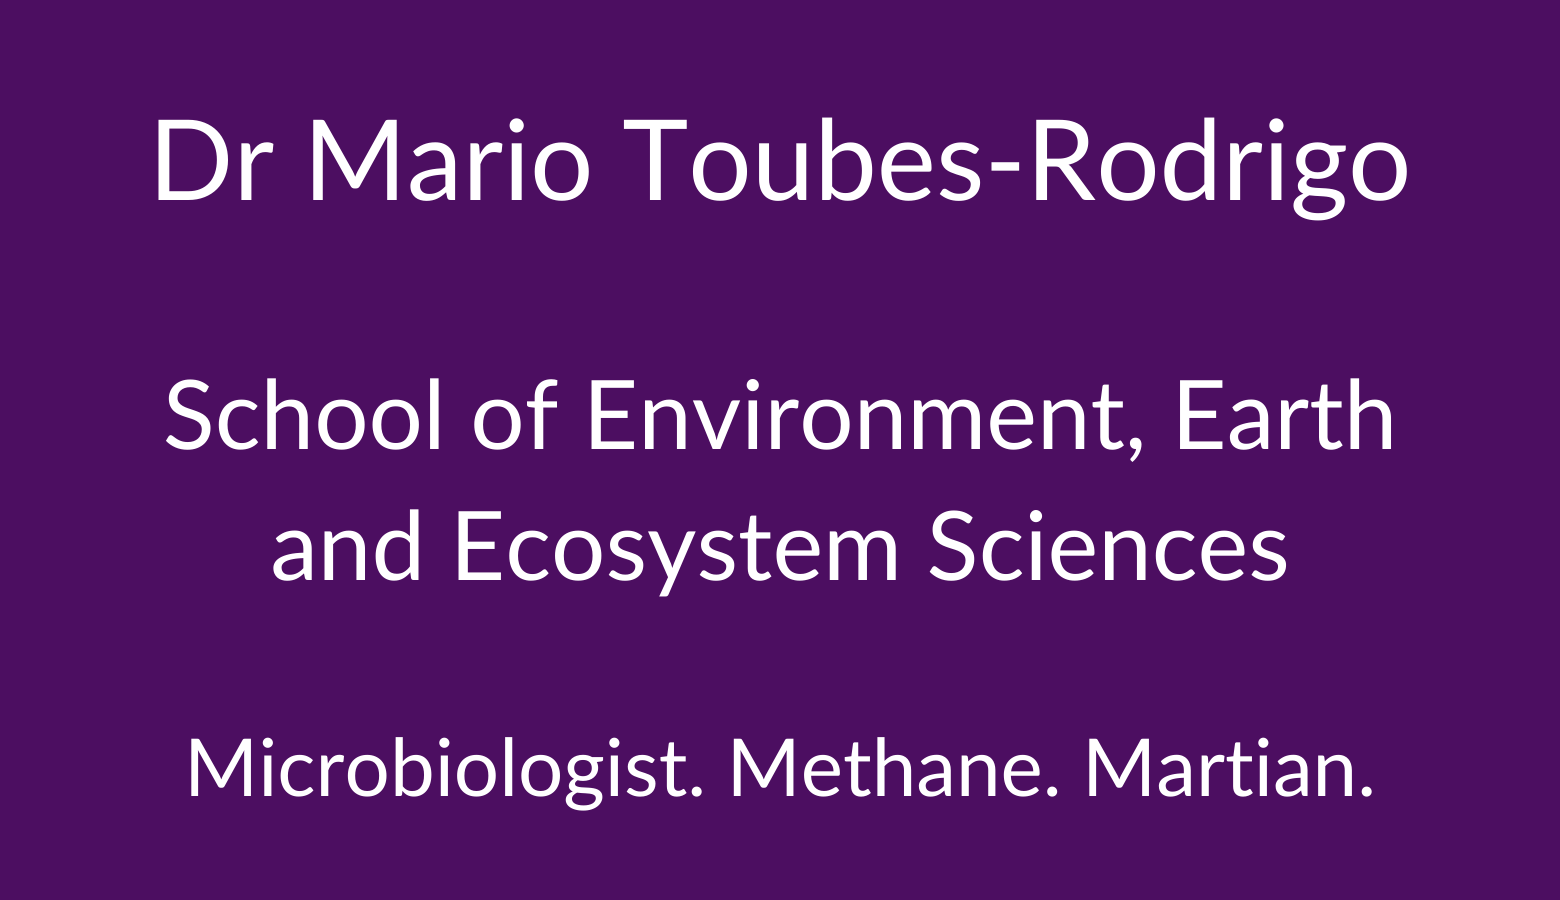 Dr Mario Toubes-Rodrigo. School of Environment, Earth and Ecosystem Sciences. Microbiologist. Methane. Martian.